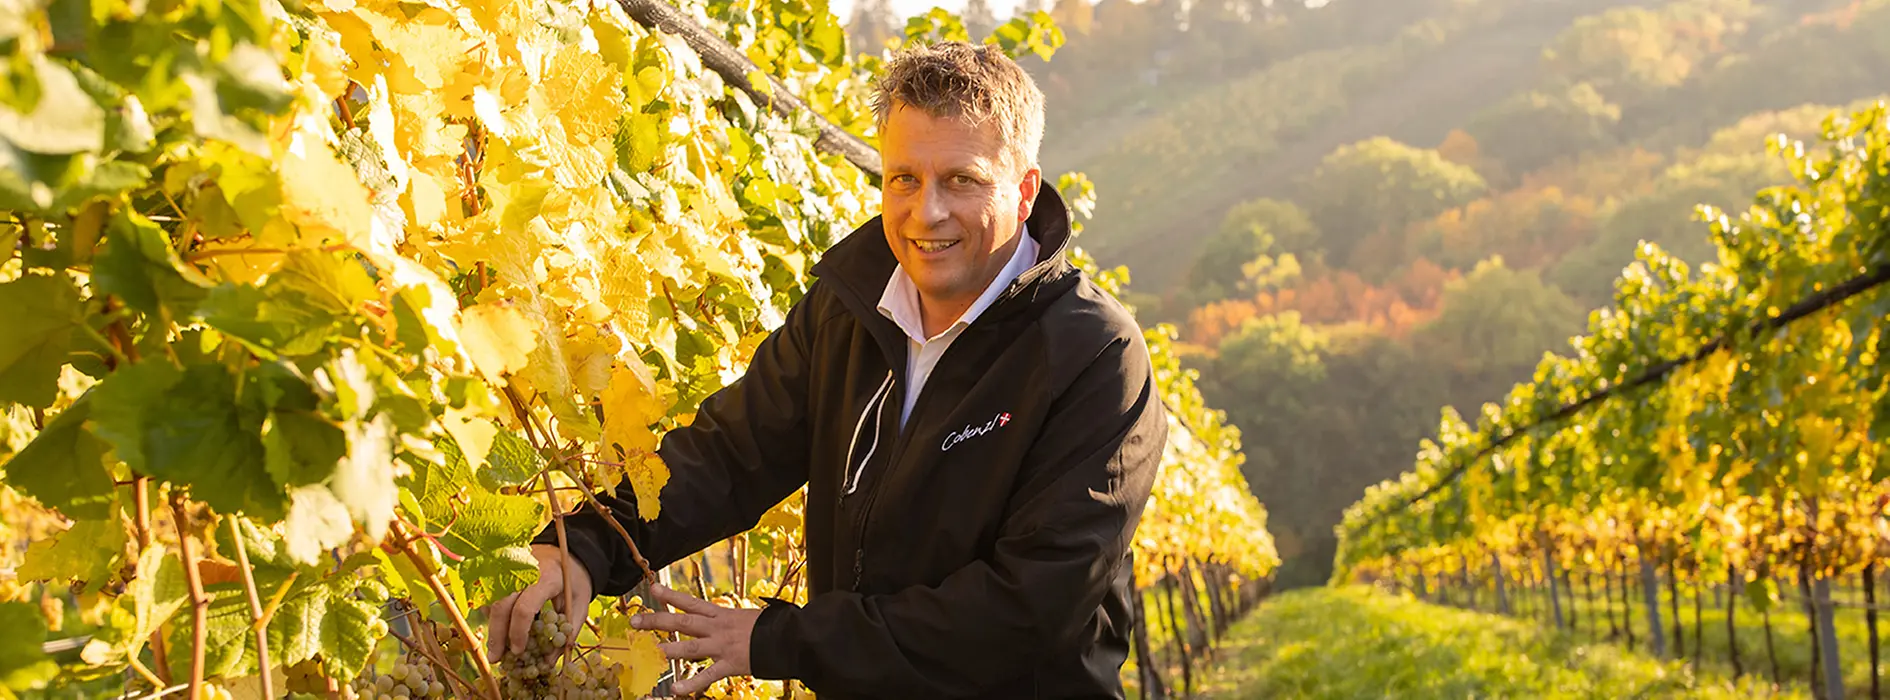 Thomas Podsednik in the vineyard